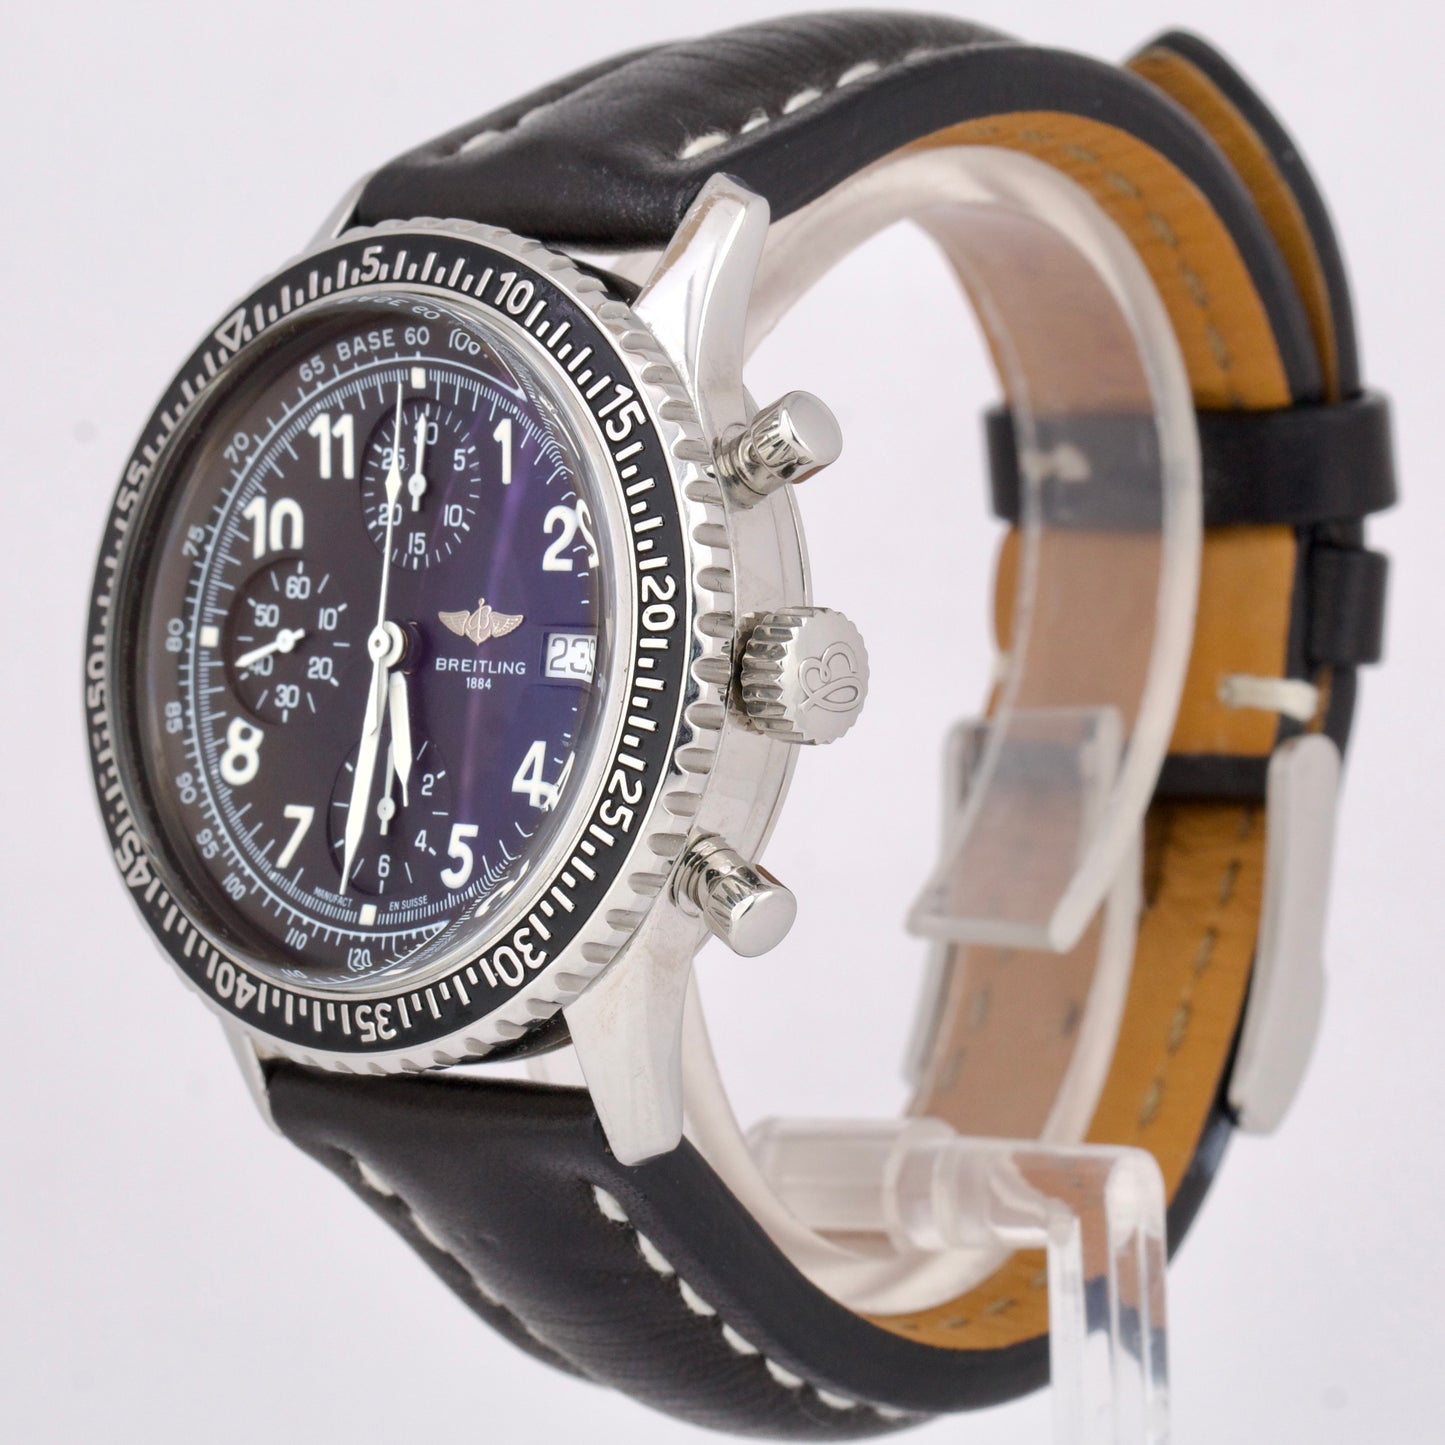 Breitling Avistar Navitimer Stainless Steel Chrono Leather 42mm Watch A13024